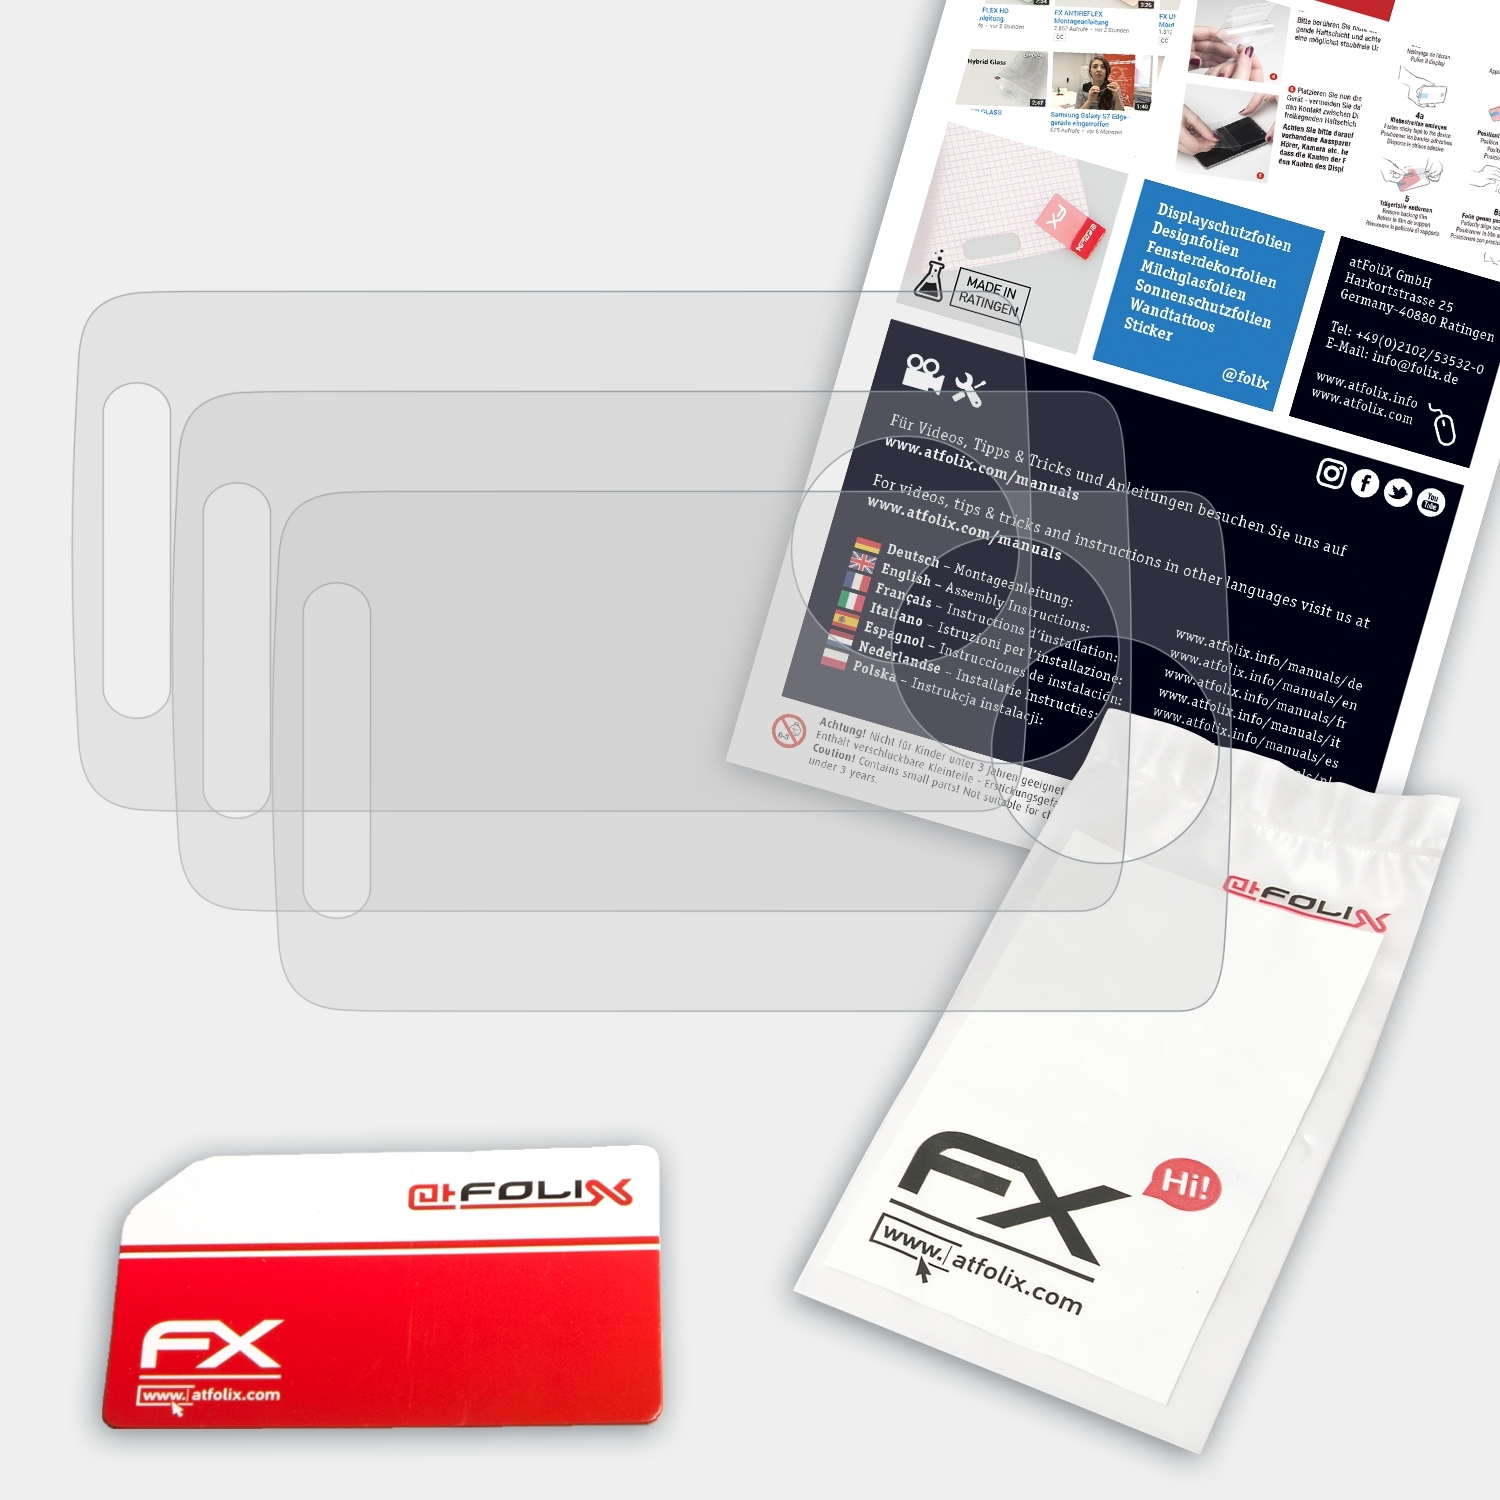 ATFOLIX 3x Displayschutz(für FX-Antireflex Kit)) View HDR-AZ1 Sony (Live